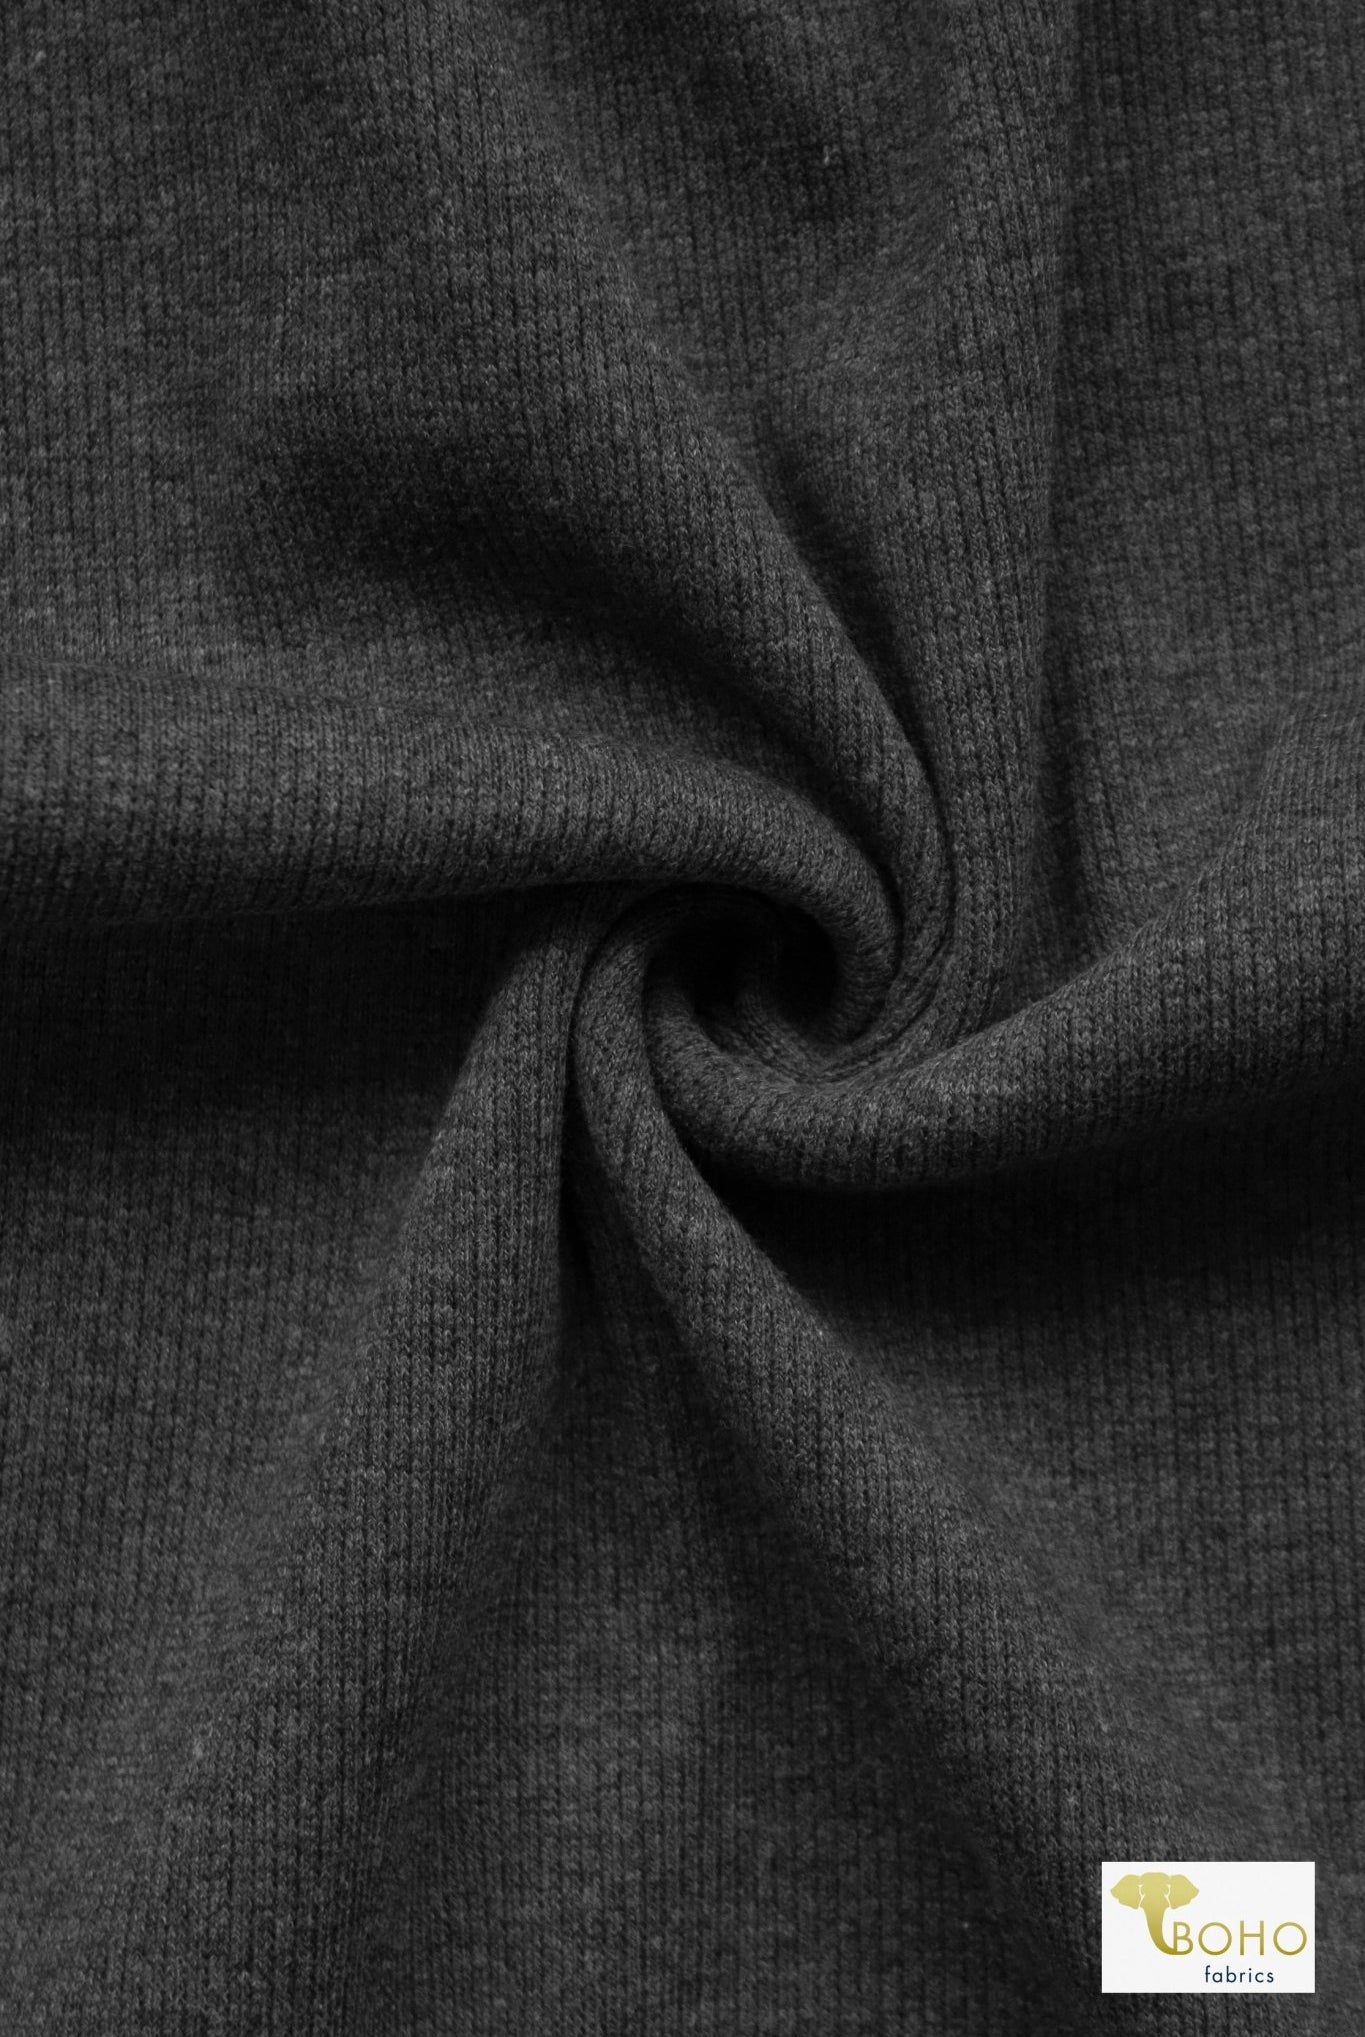 2x1 Rib Knit, CUFF. SOLD BY THE HALF YARD - Boho Fabrics